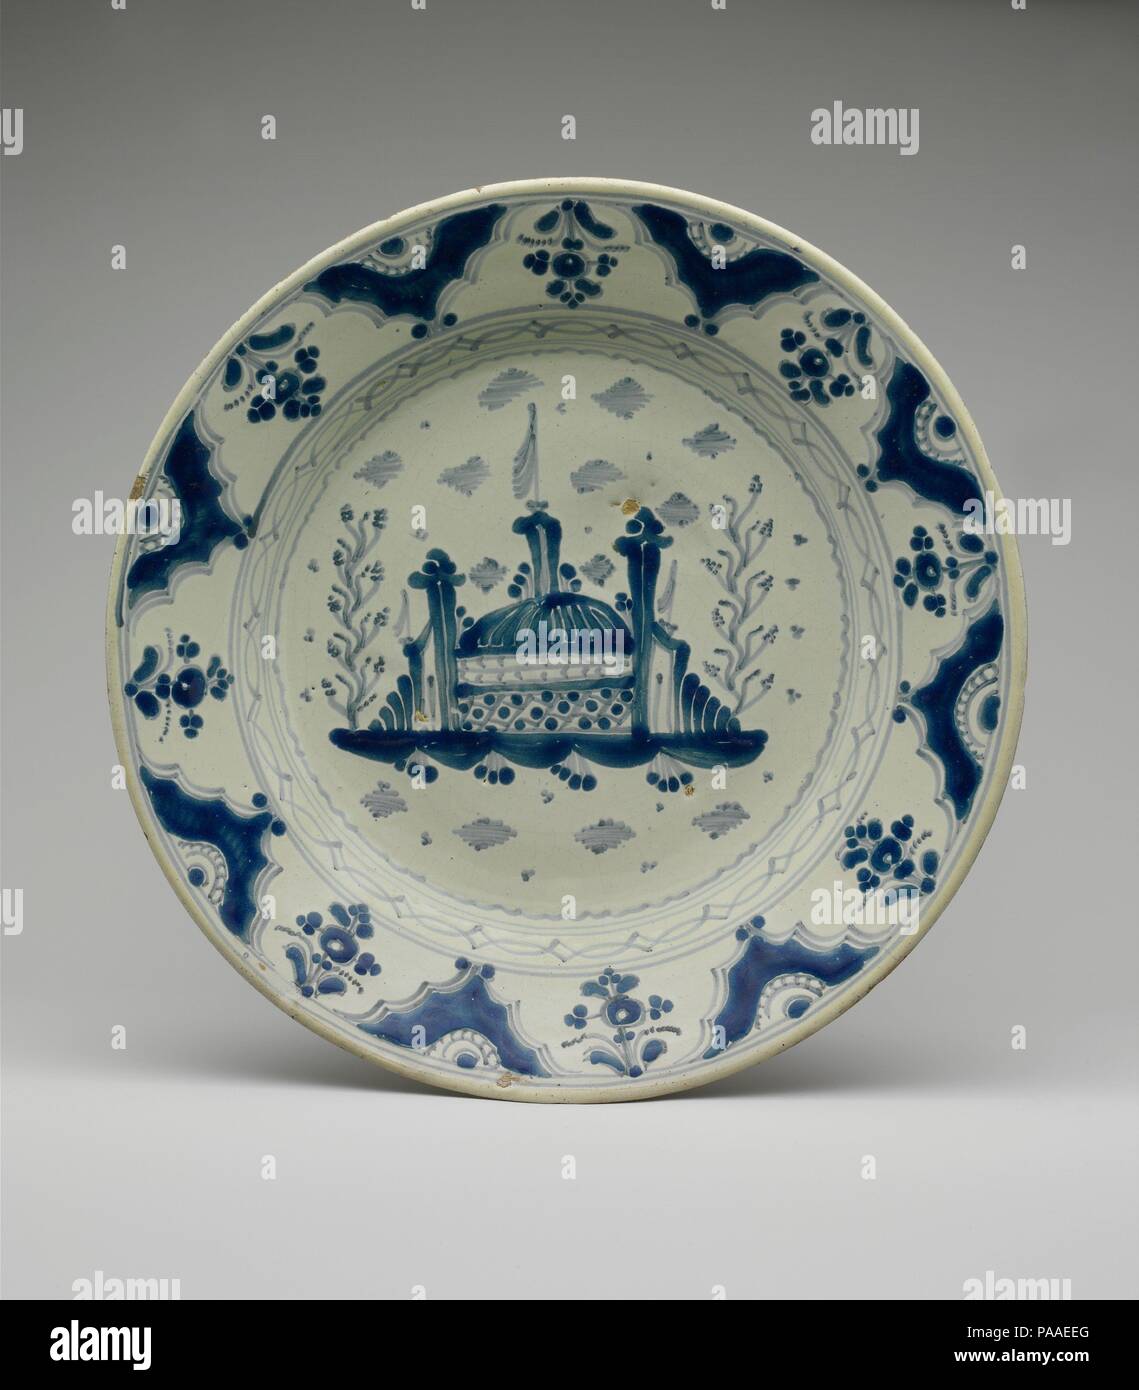 Plate. Culture: Mexican. Dimensions: H. 2 5/8 in. (6.7 cm); Diam. 13 3/4 in. (34.9 cm). Date: ca. 1800. Museum: Metropolitan Museum of Art, New York, USA. Stock Photo